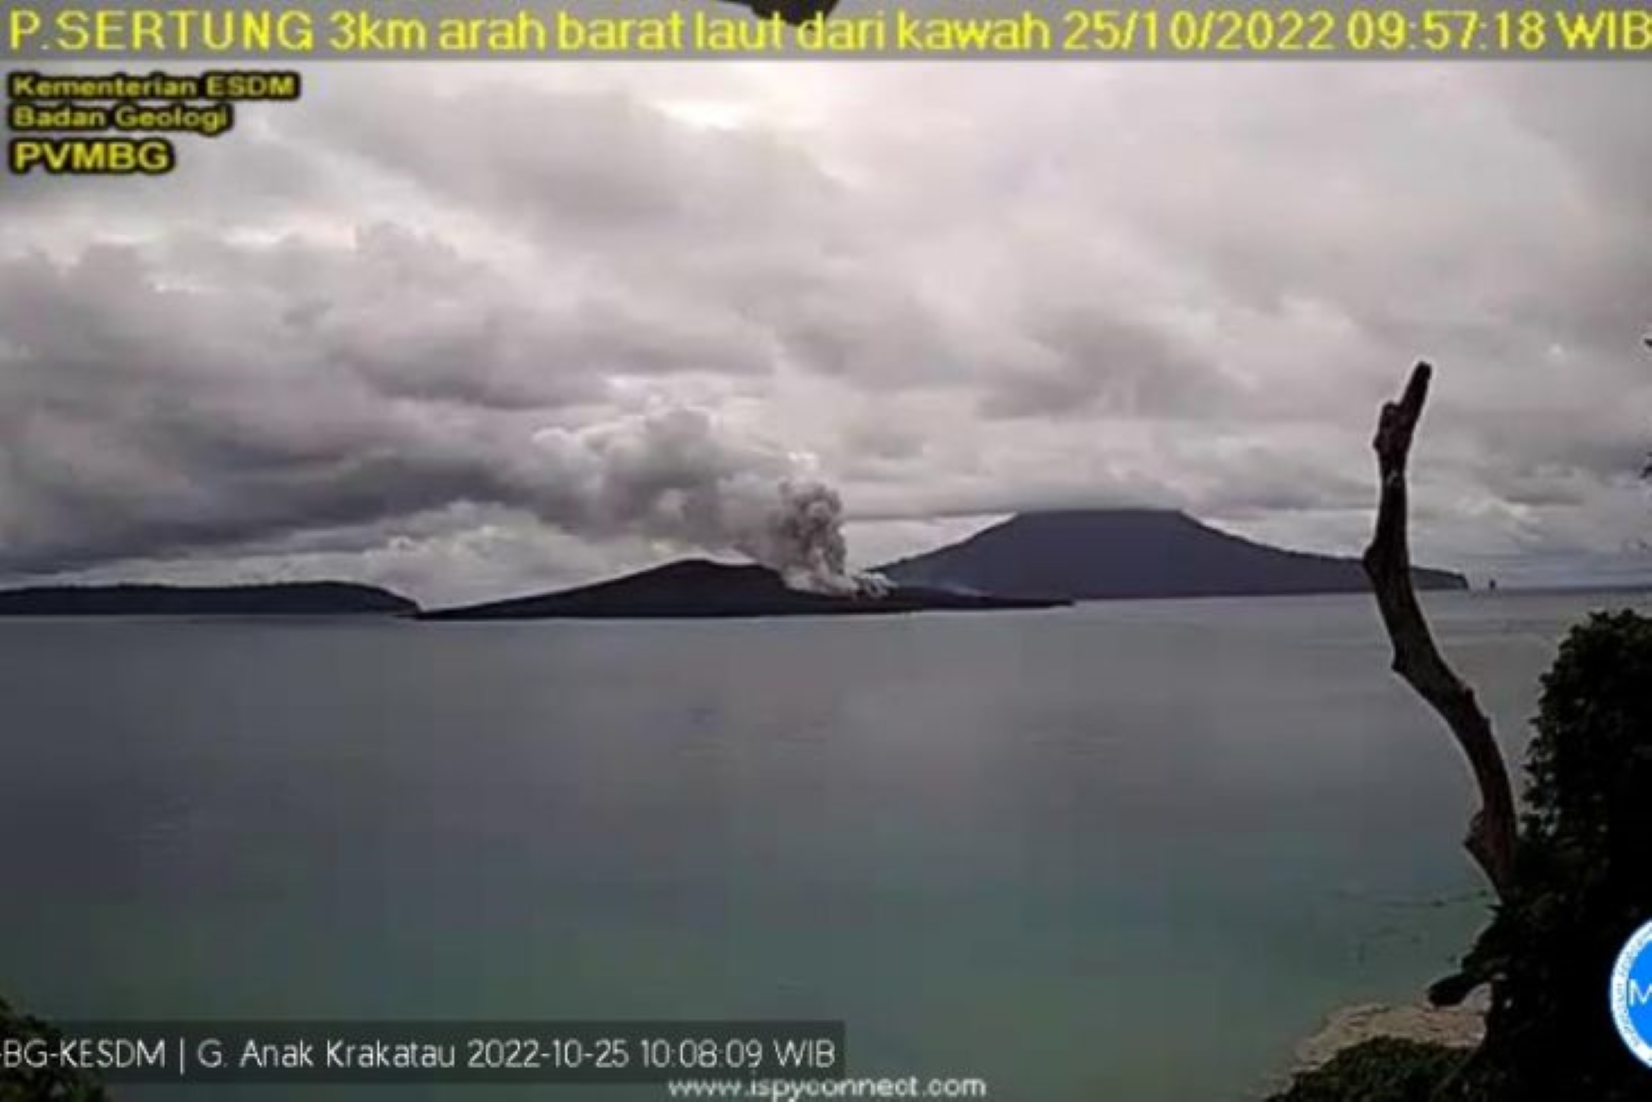 Indonesia’s Anak Krakatau Volcano Erupted Again